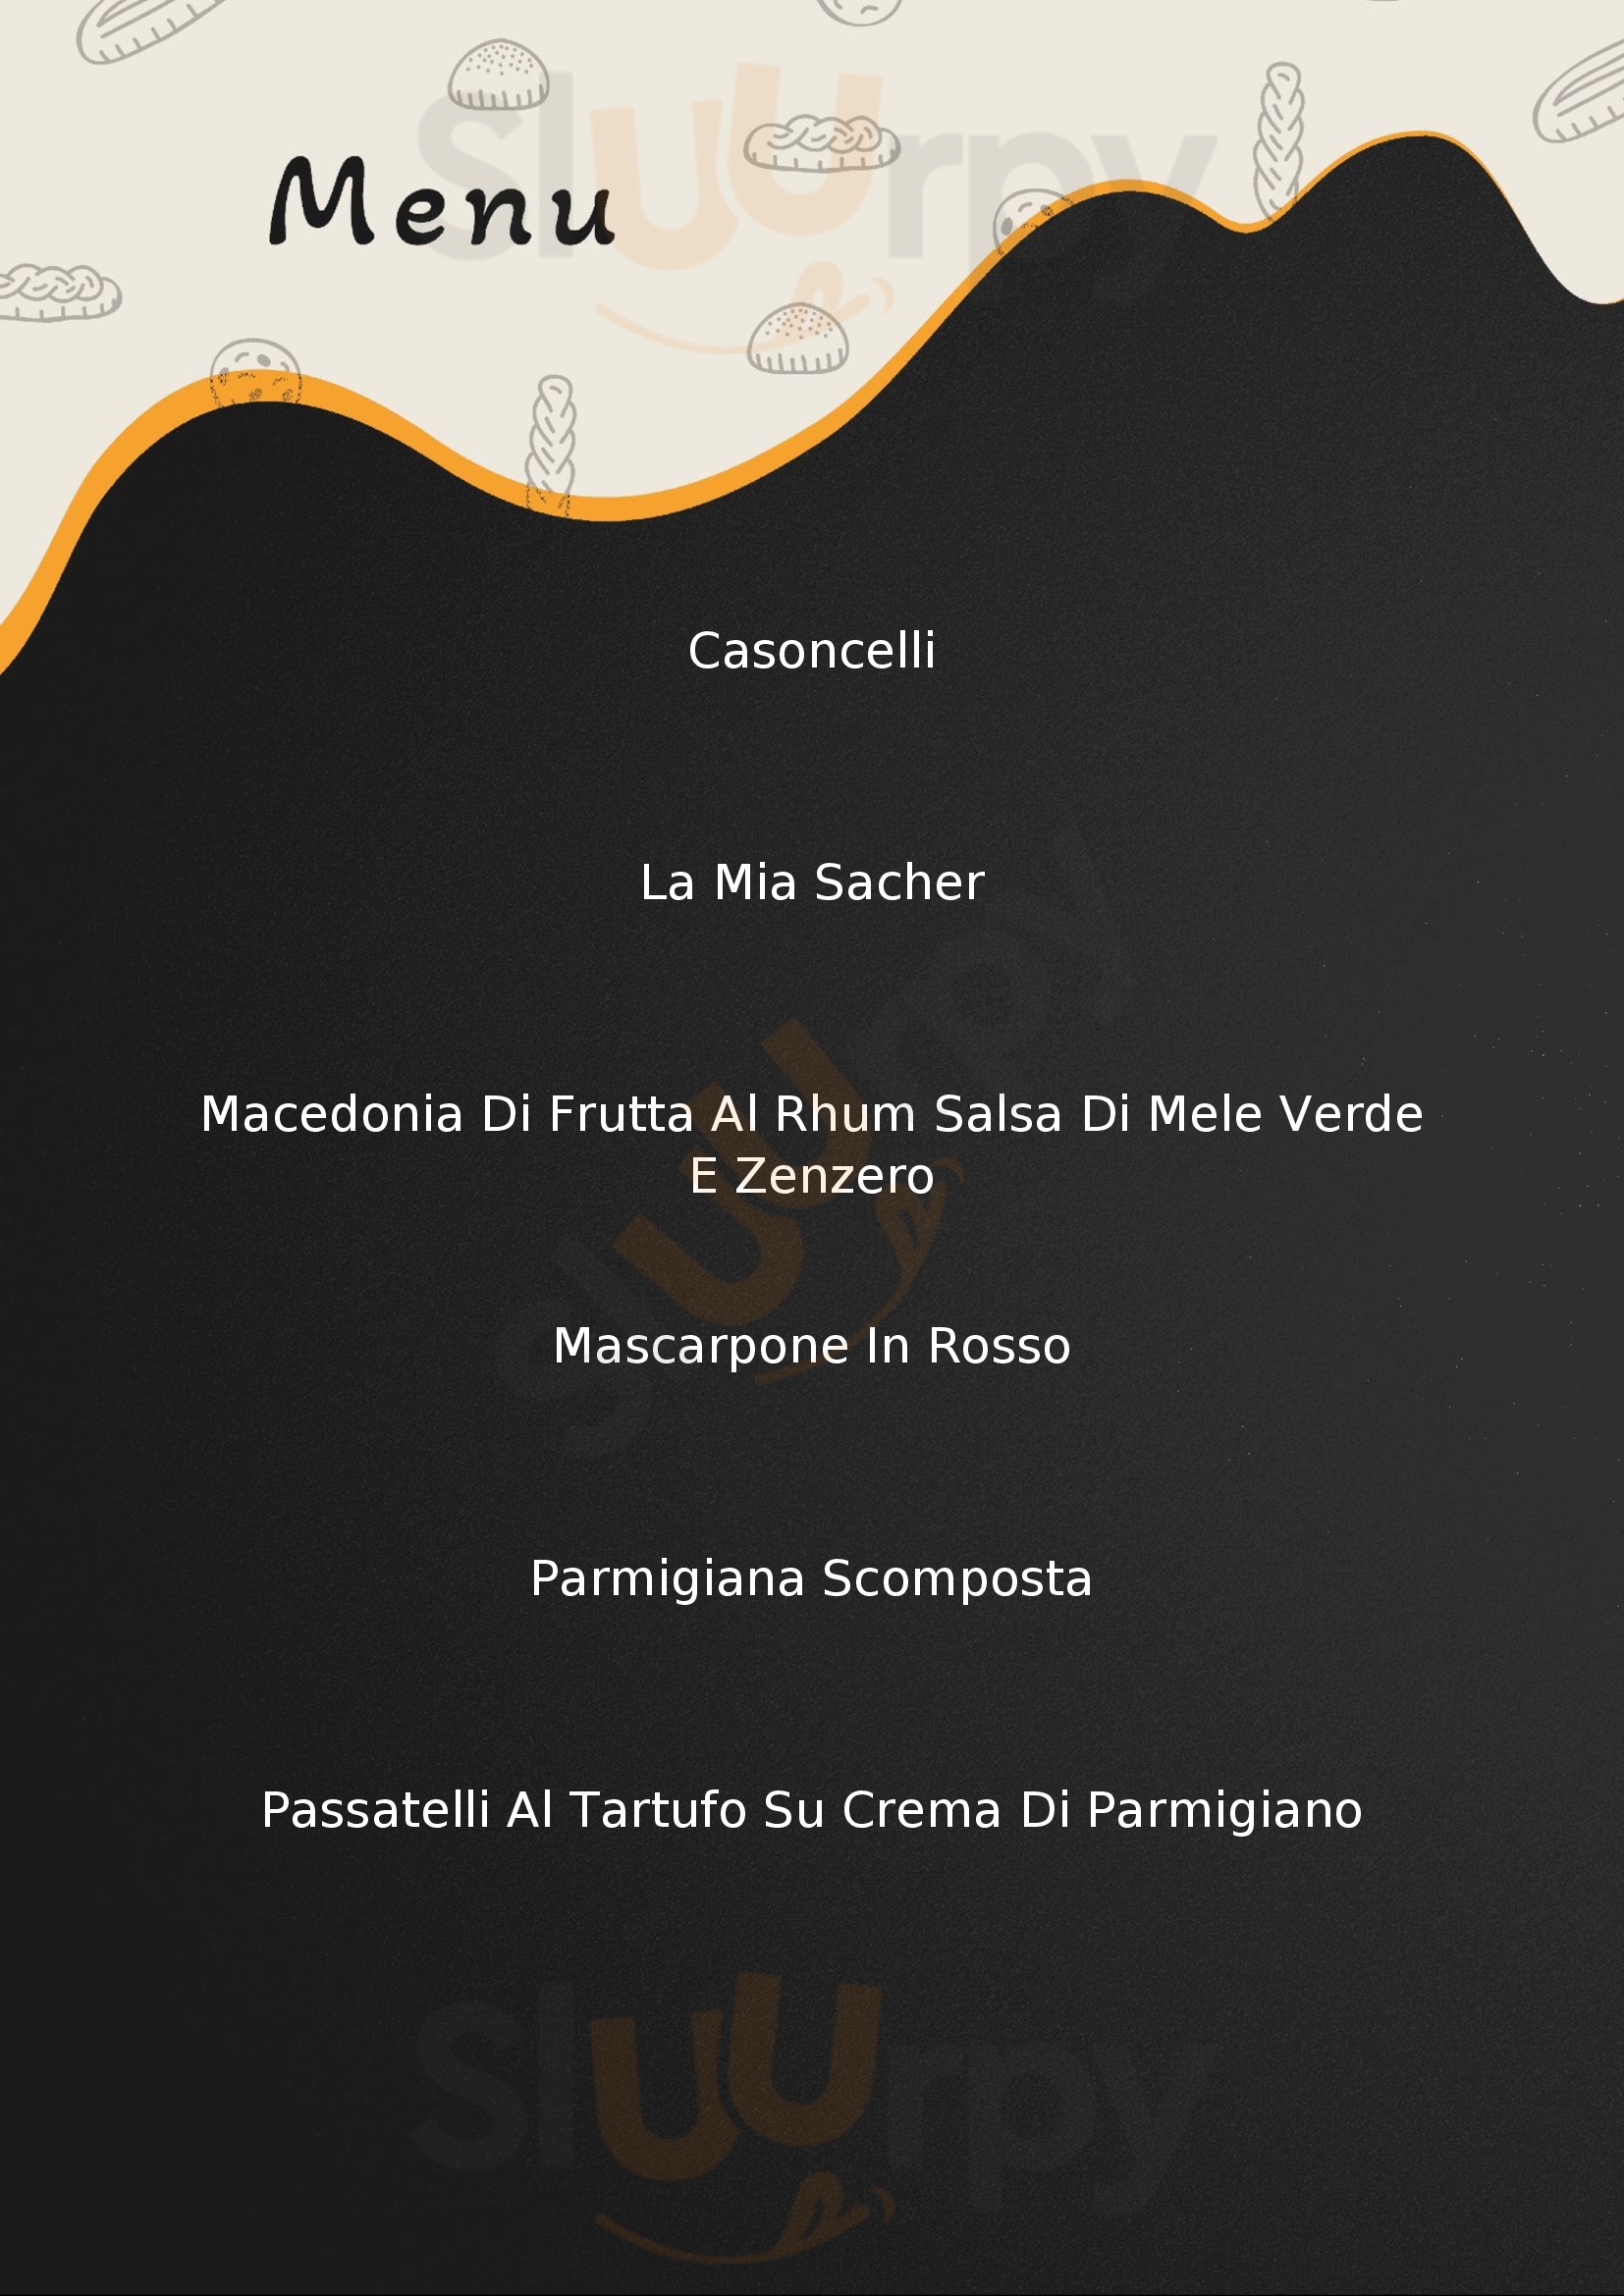 Cantine Antica Grotta Riolo Terme menù 1 pagina